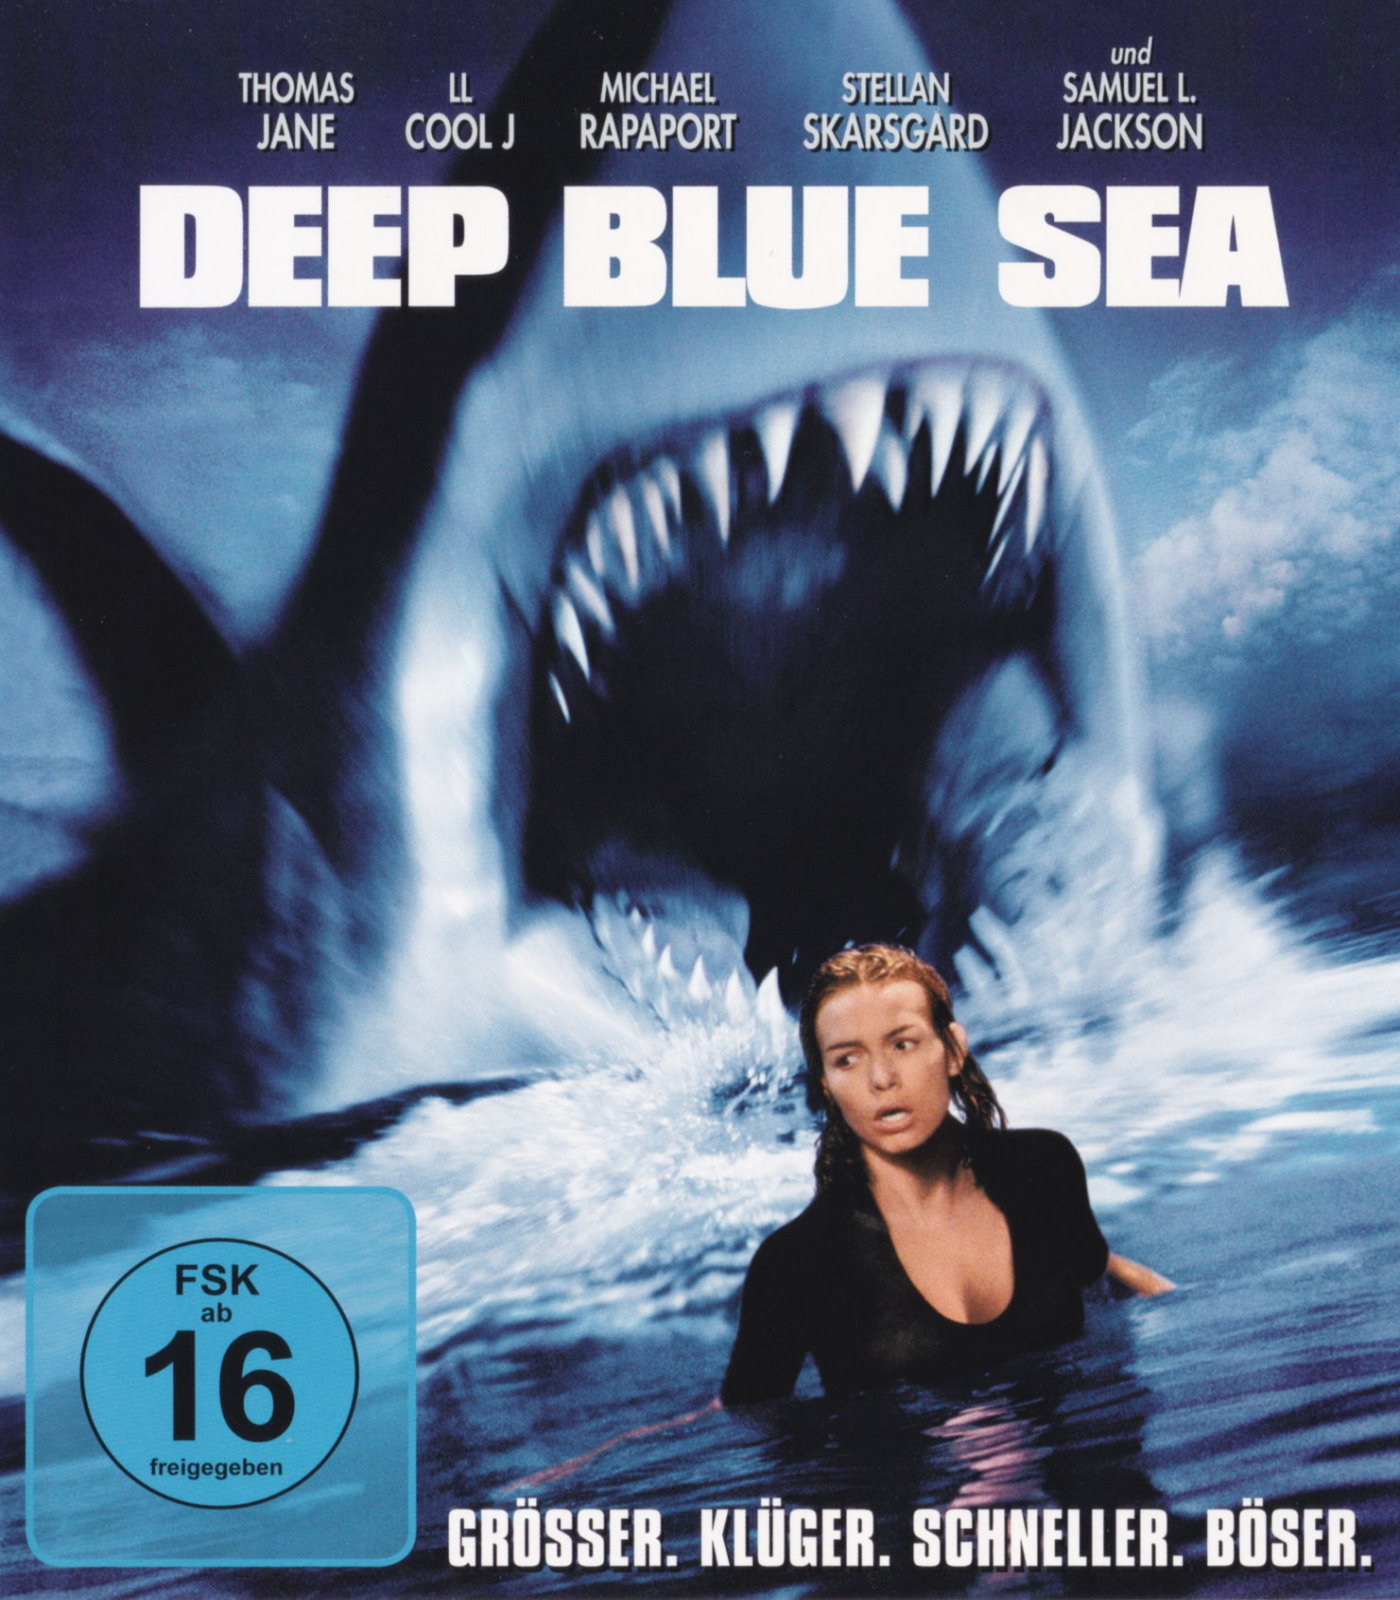 Cover - Deep Blue Sea.jpg